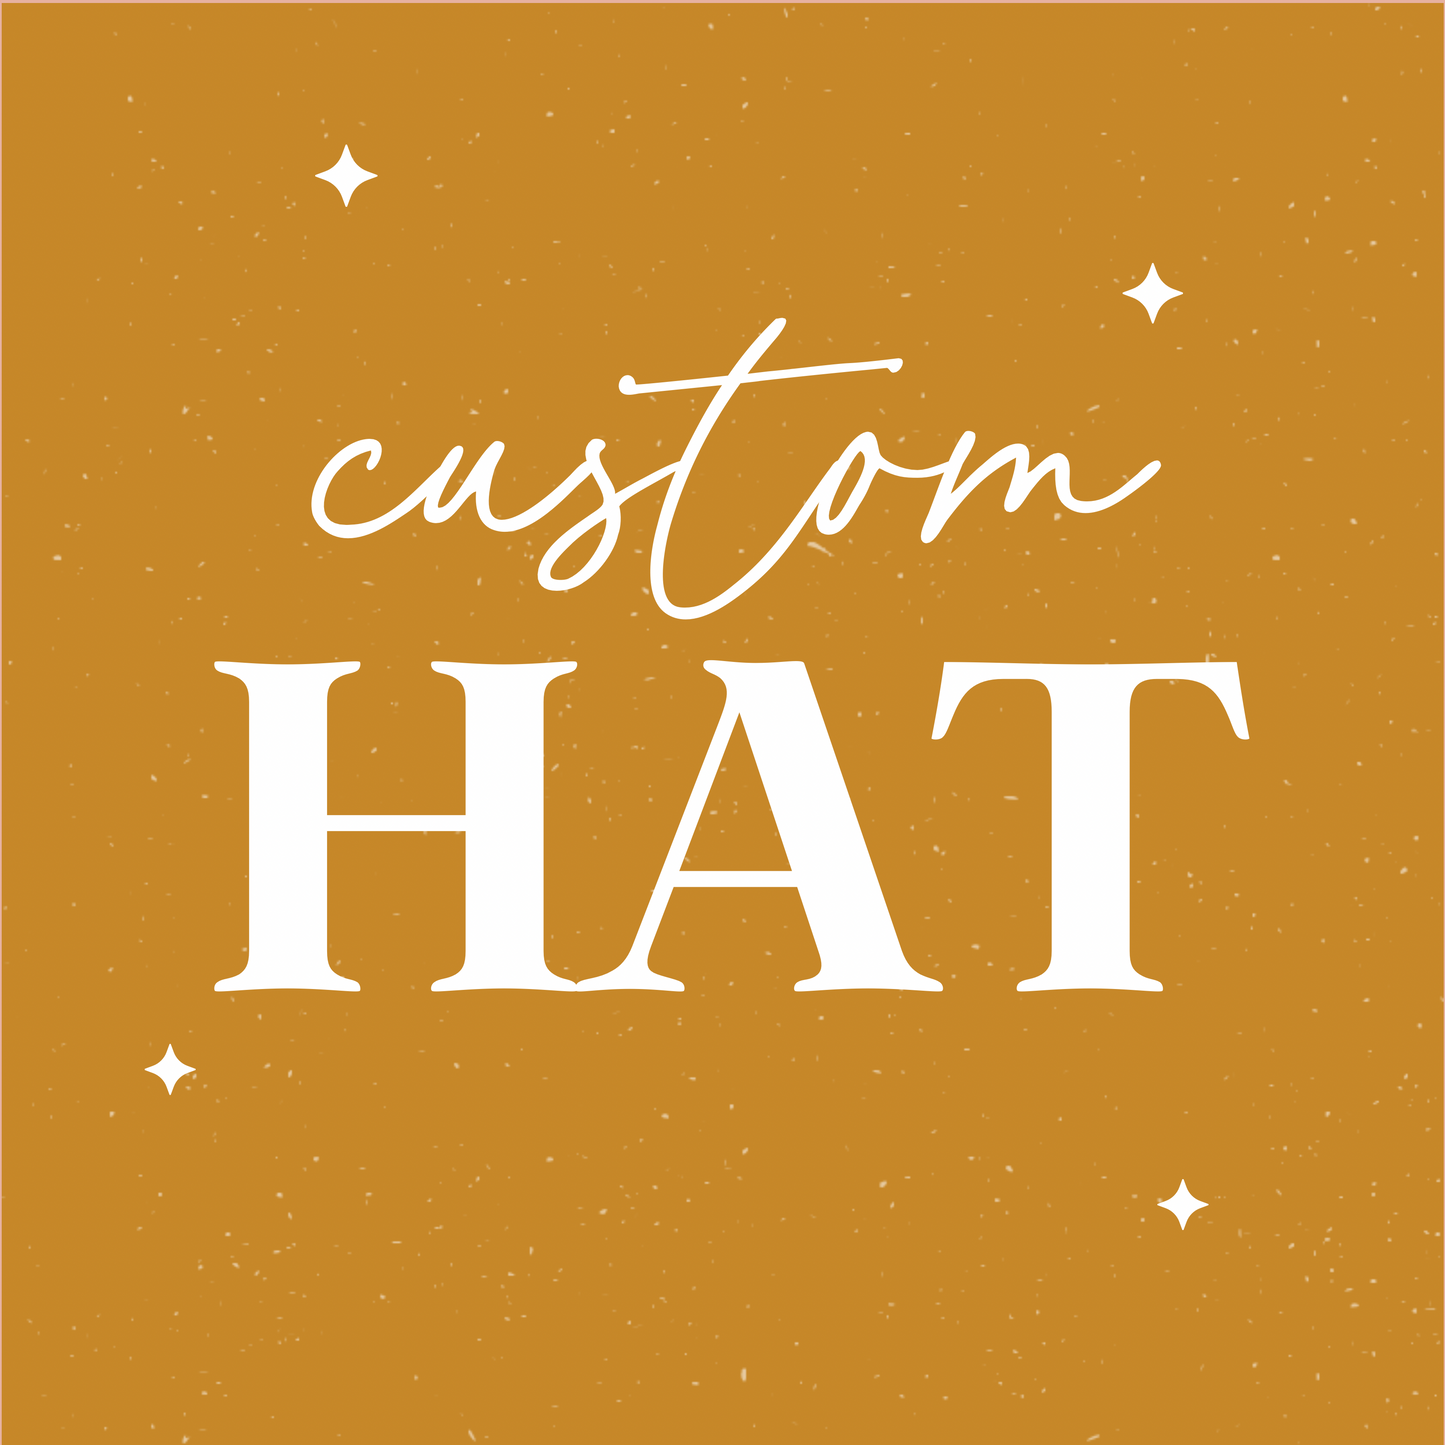 Hat Bar - Virtual Custom Consultation